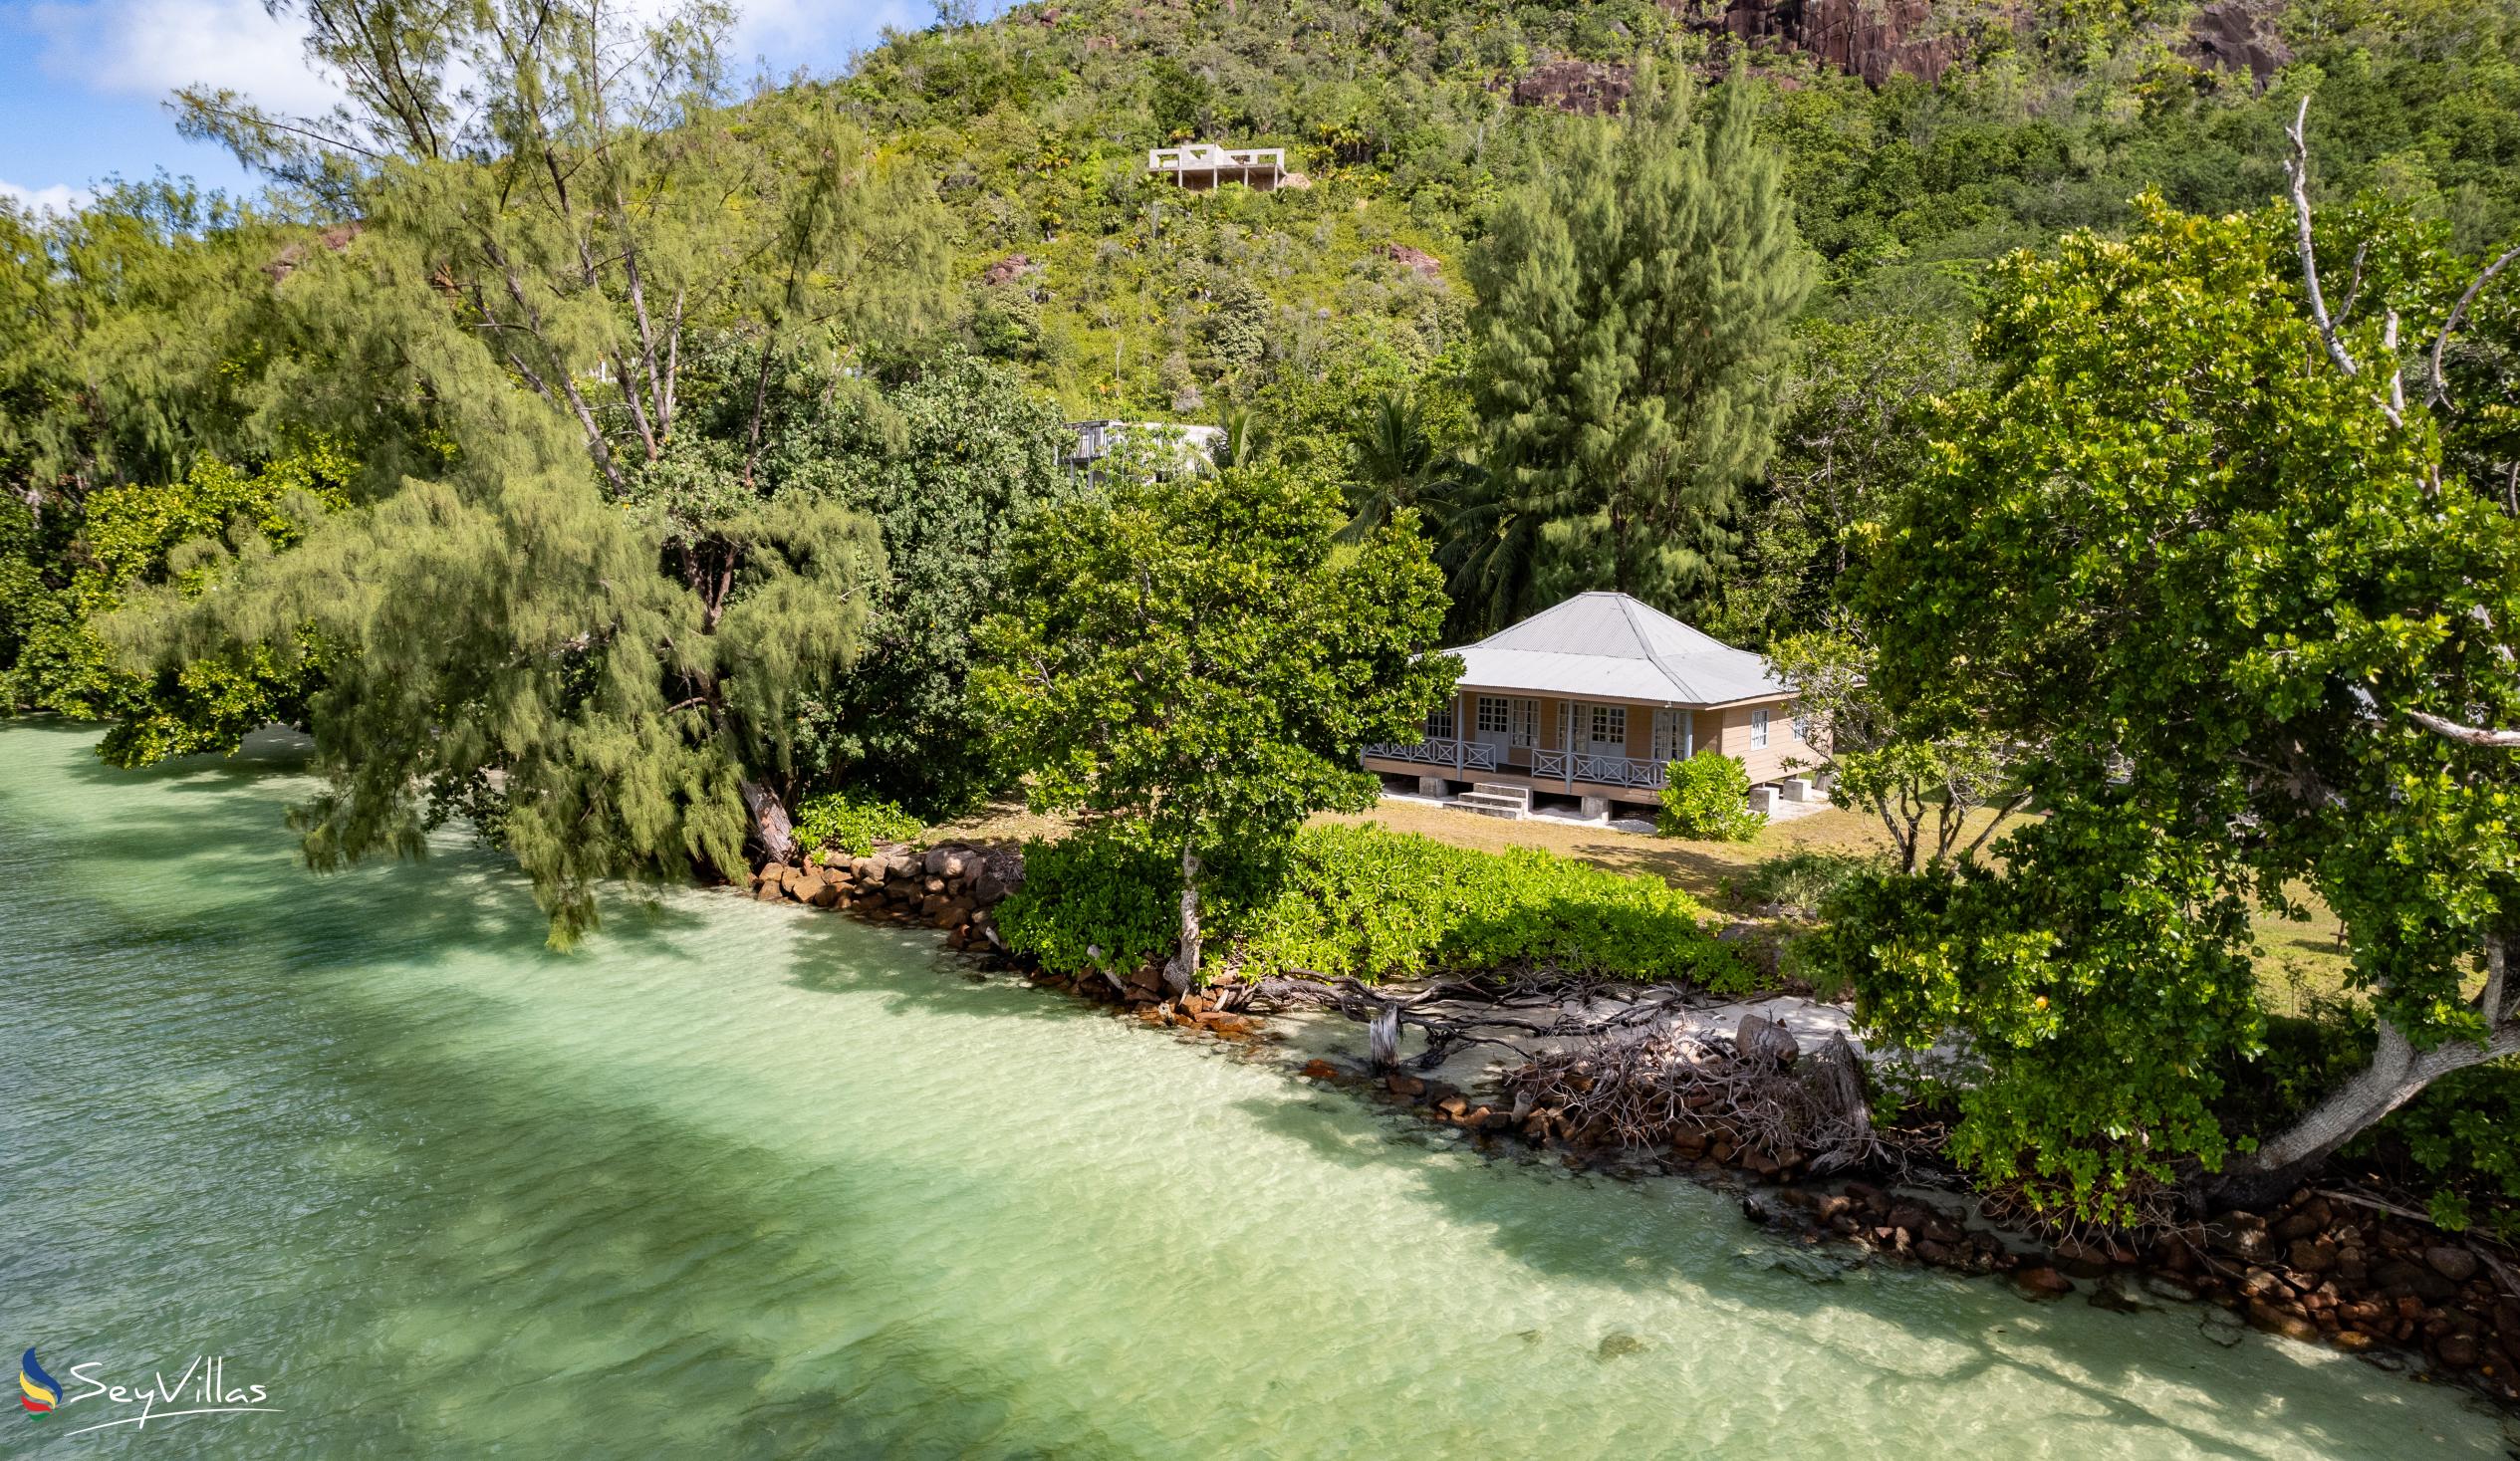 Foto 19: Le Vasseur La Buse Eco Resort - Aussenbereich - Praslin (Seychellen)